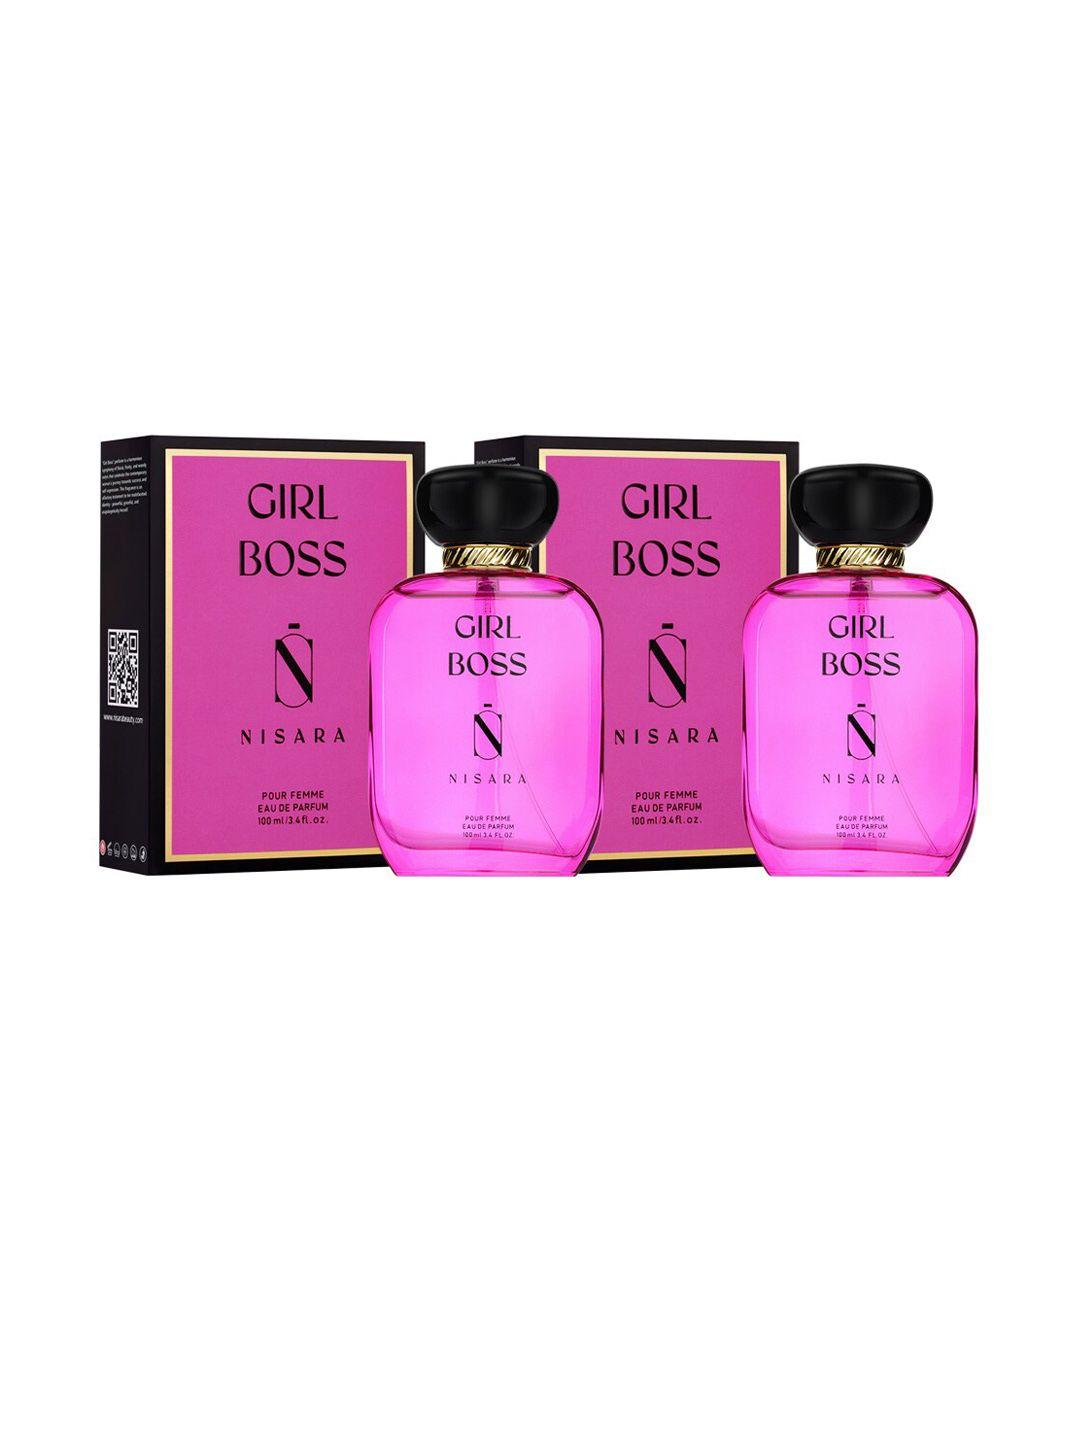 nisara set of 2 girl boss fragrance eau de perfume - 100ml each